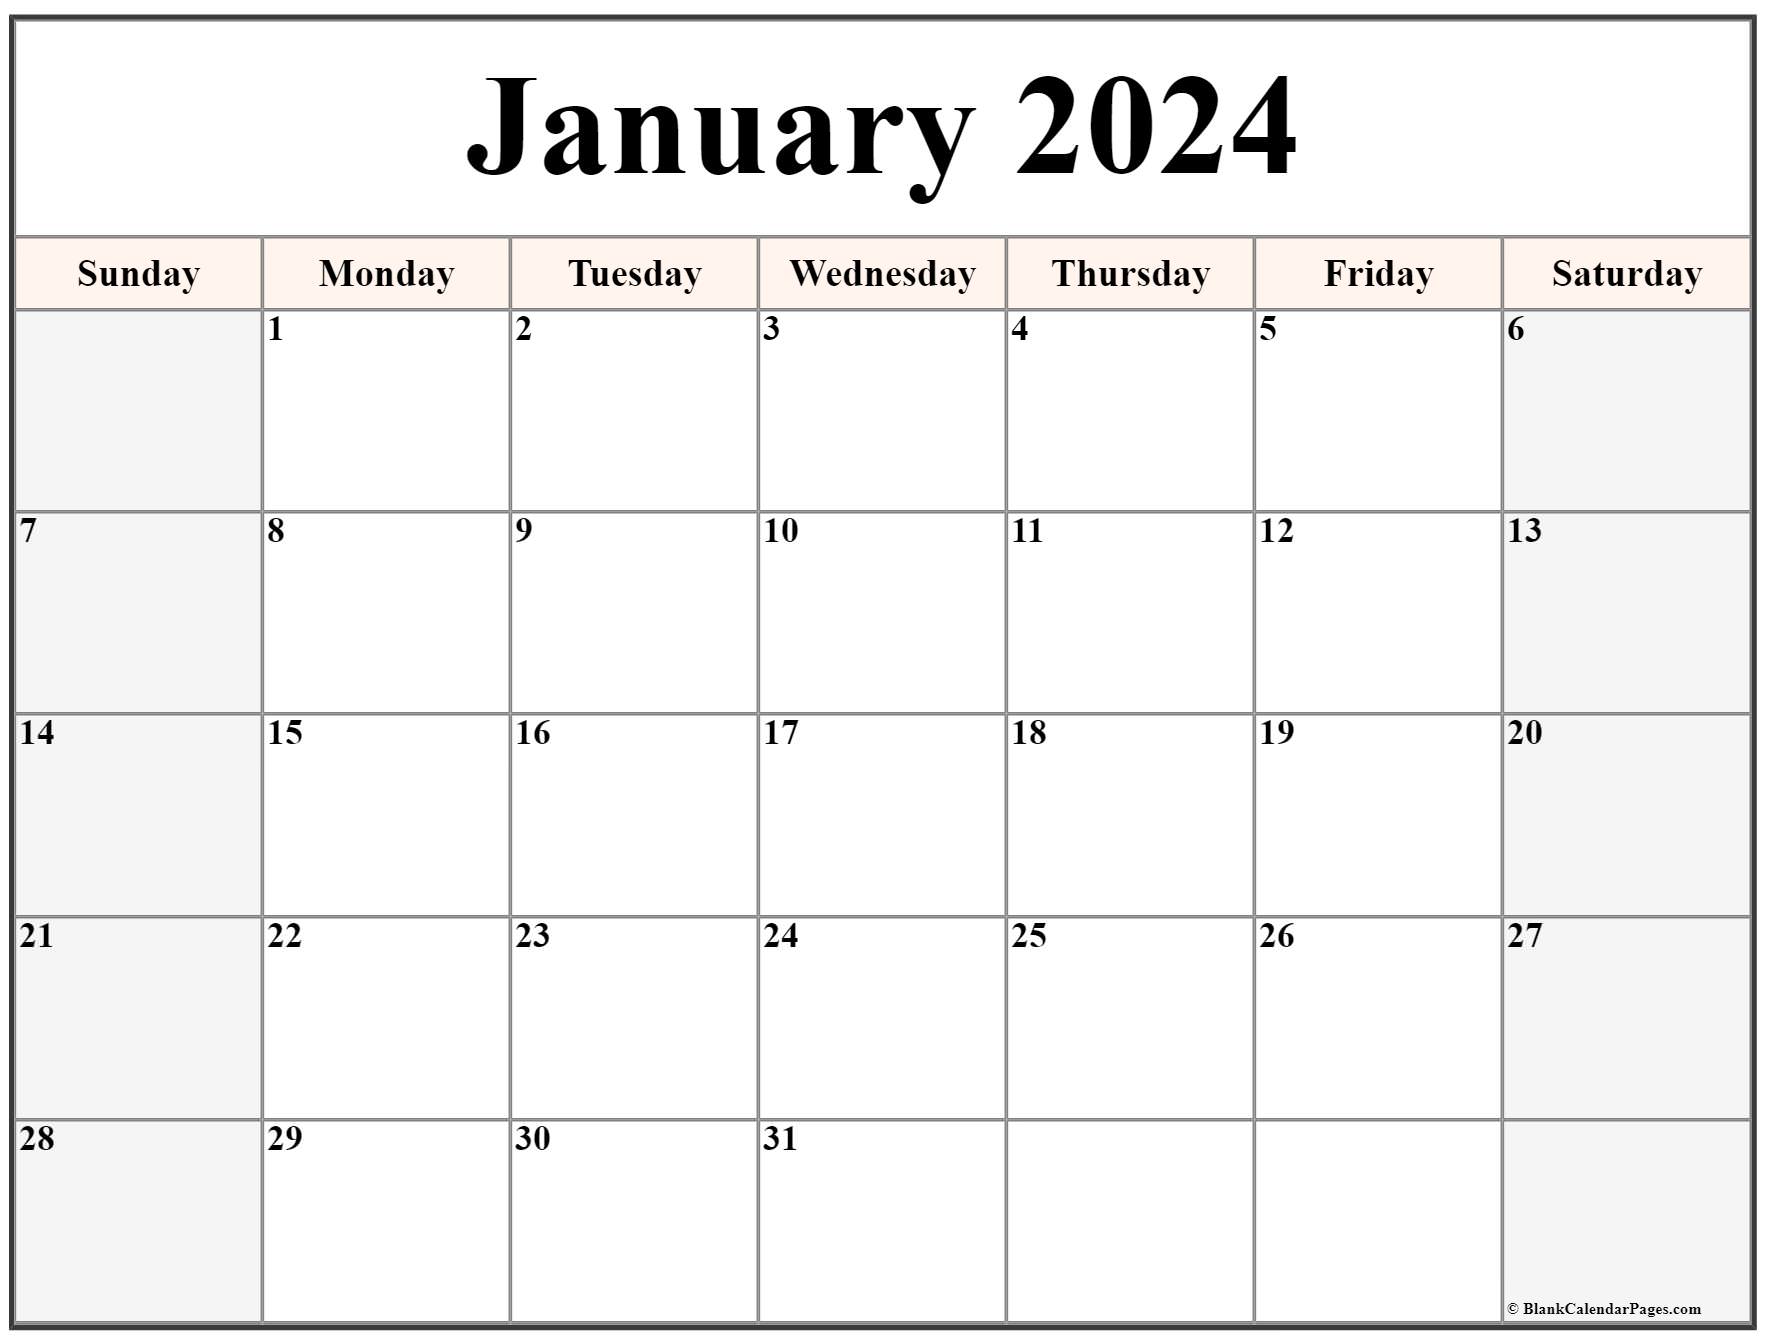 2023 January Calendar Printable Calendars Printable Images and Photos